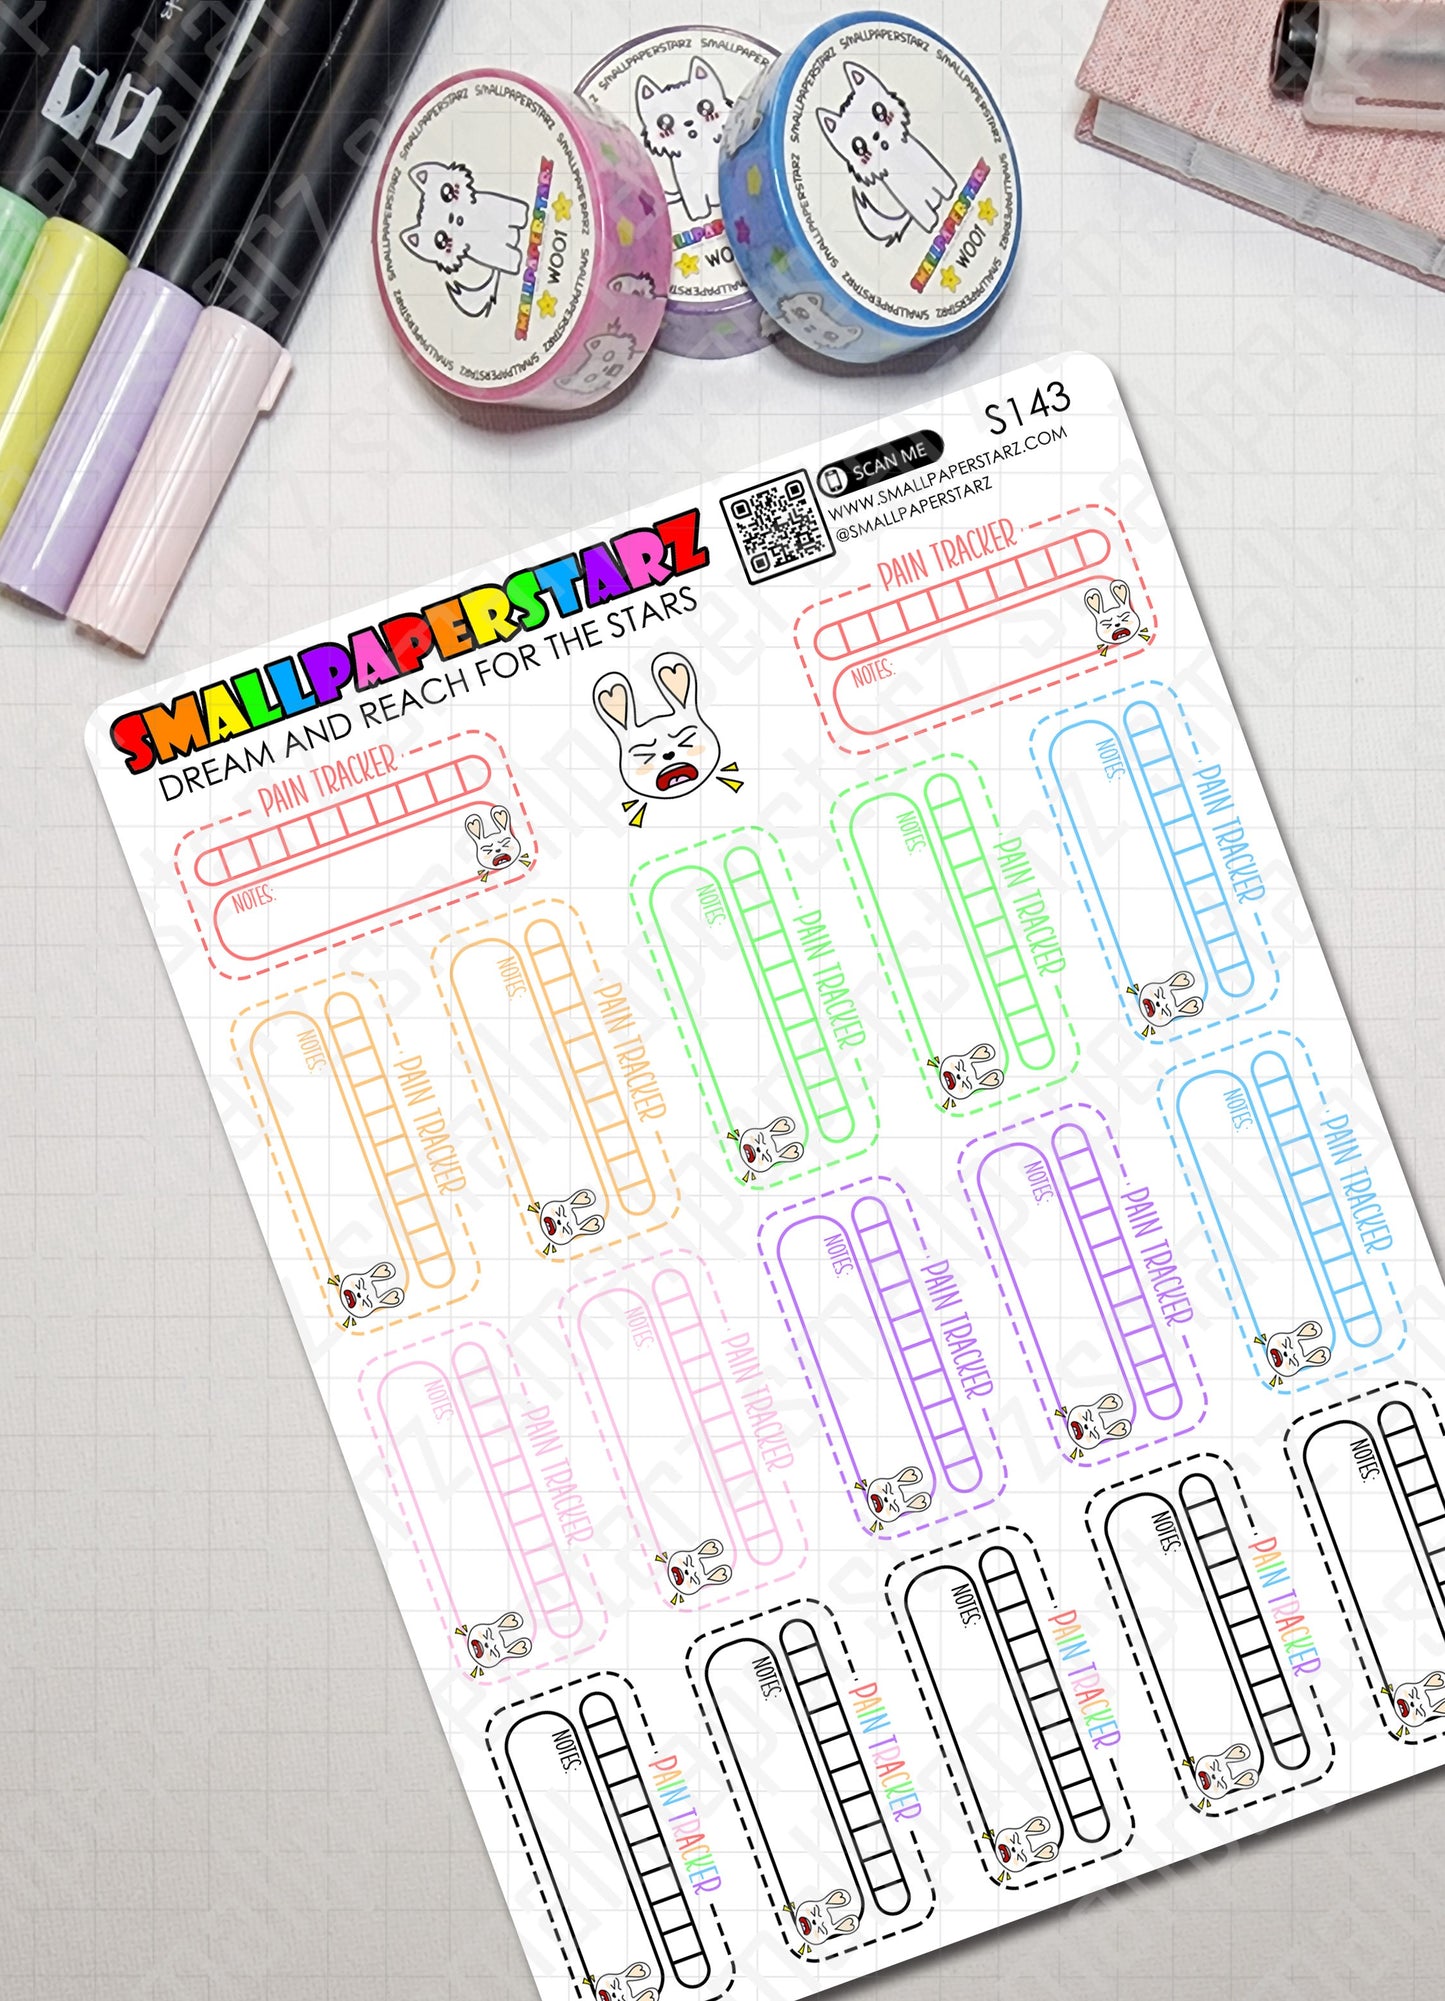 S143 - Pain Tracker Rainbow Sticker Sheet